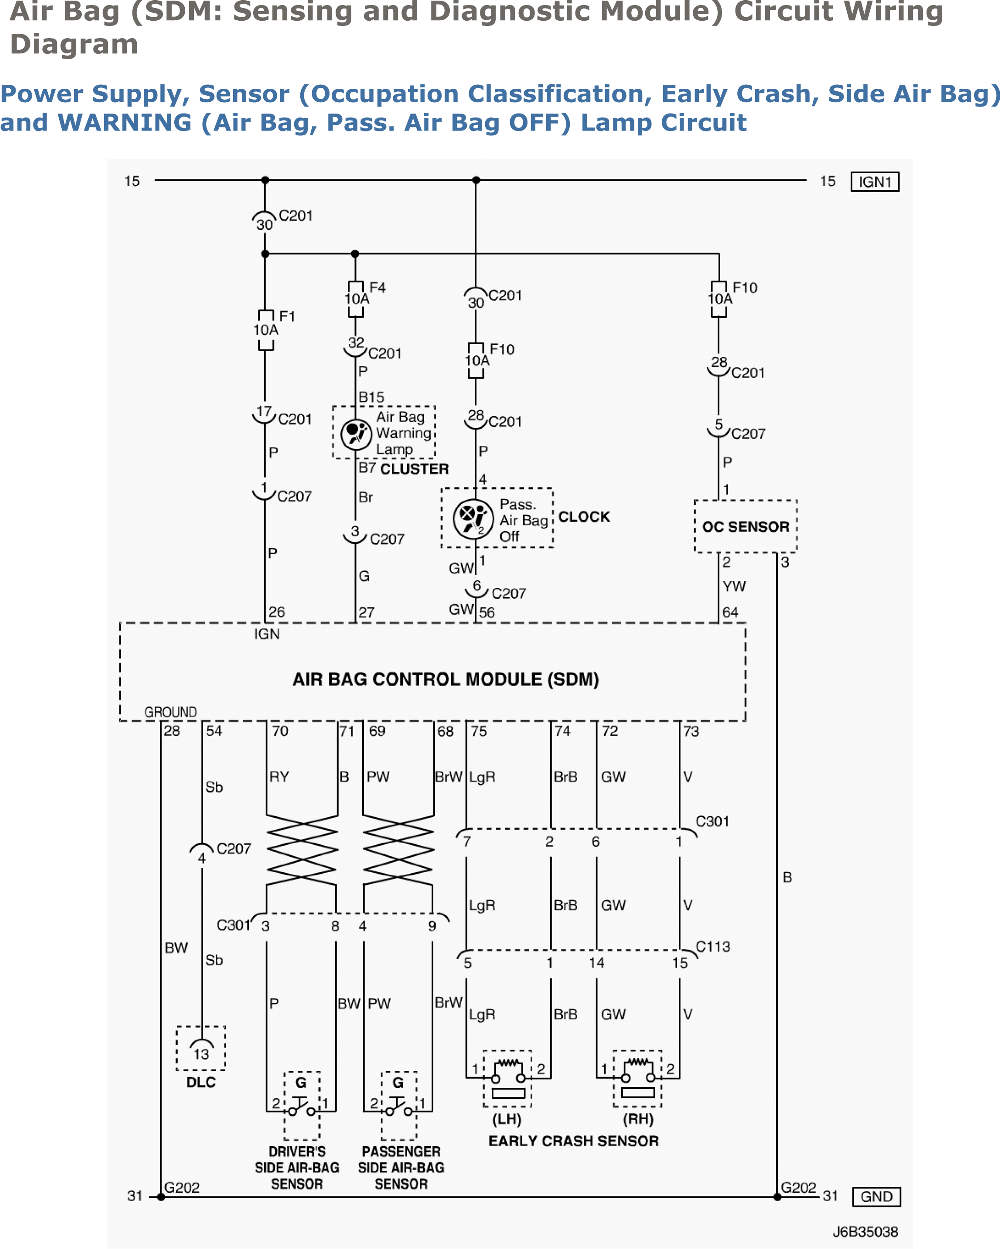 Wiring Diagram For Windshield Wiper Motor Suzuki Forenza 08 suzuki forenza radio wiring diagram 